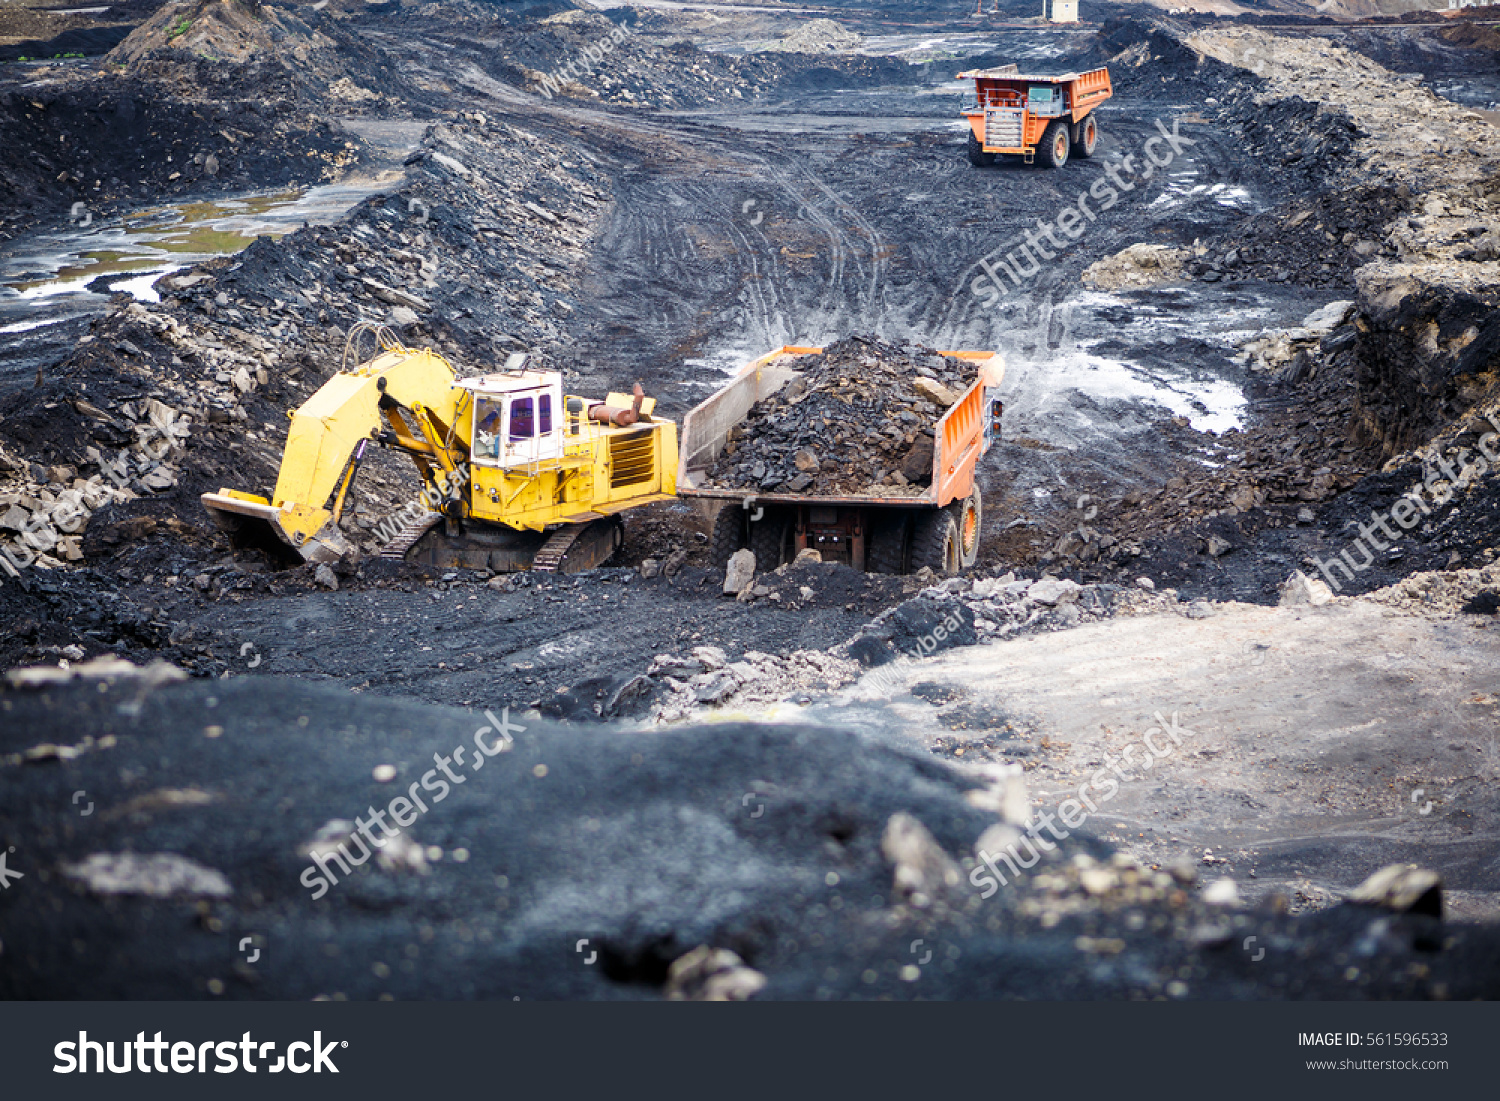 Mining dump trucks working in Lignite coalmine #561596533